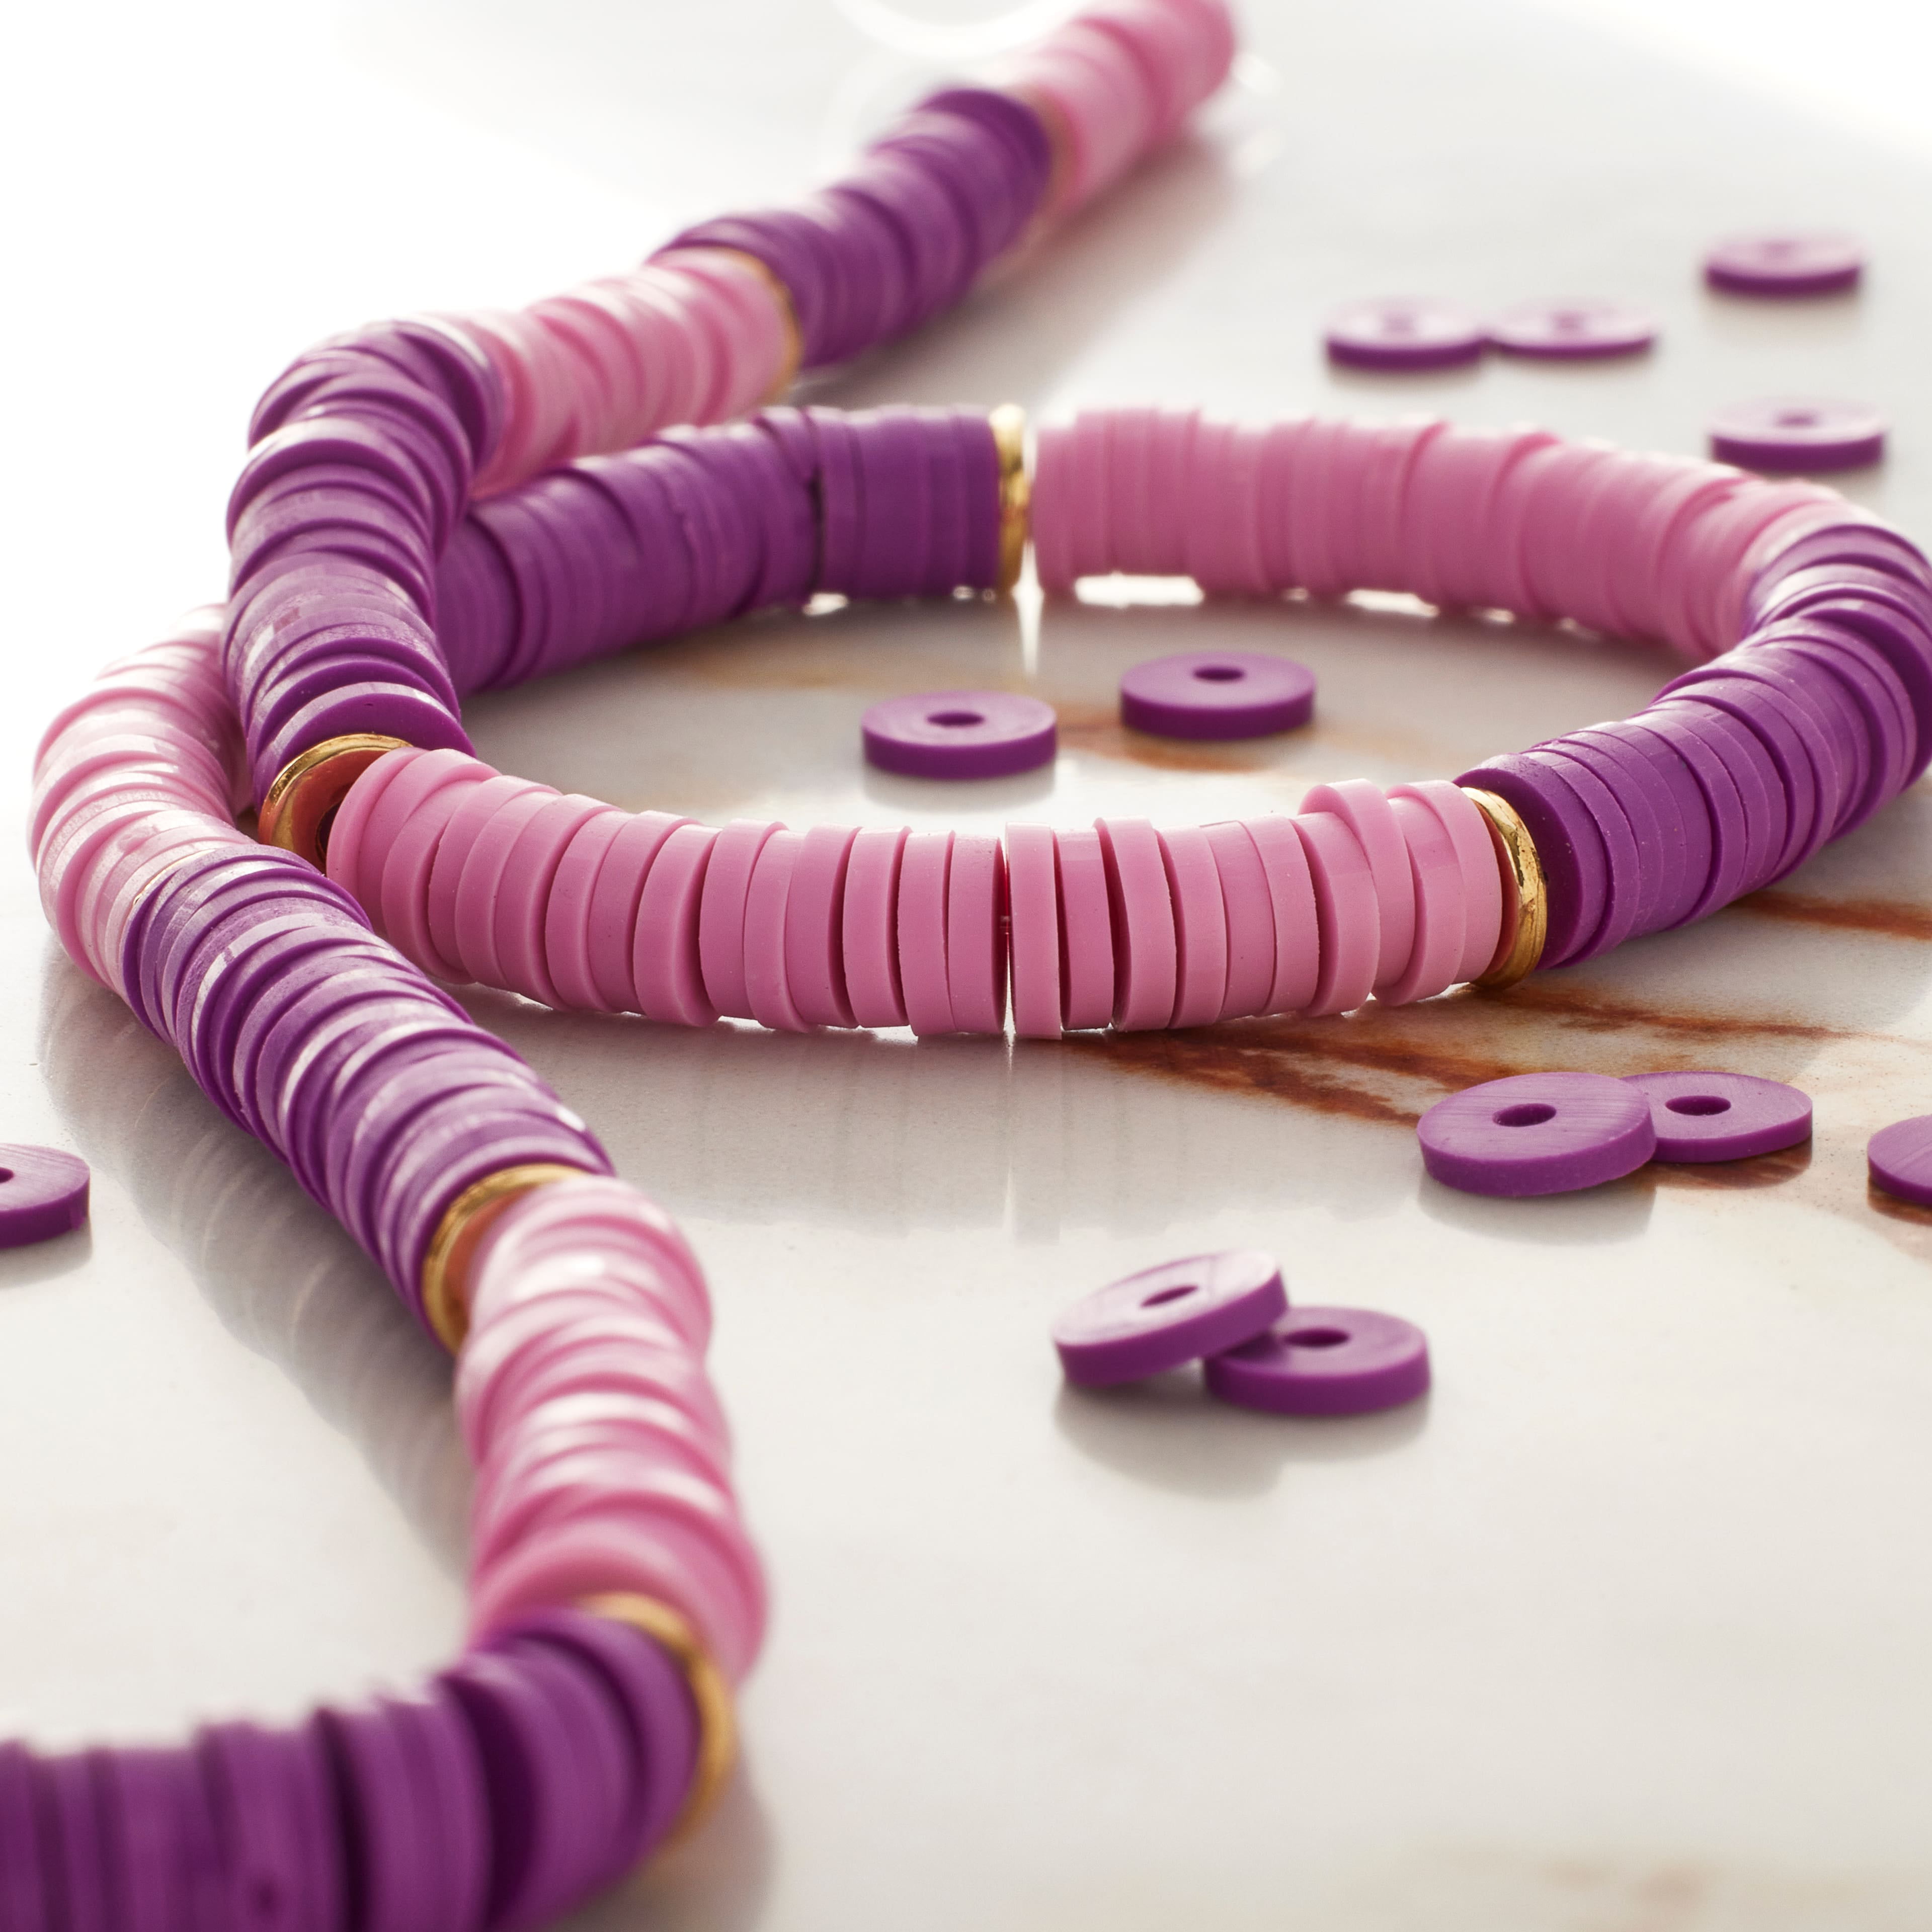 Polymer Clay Heishi Beads, 6mm by Bead Landing™ 